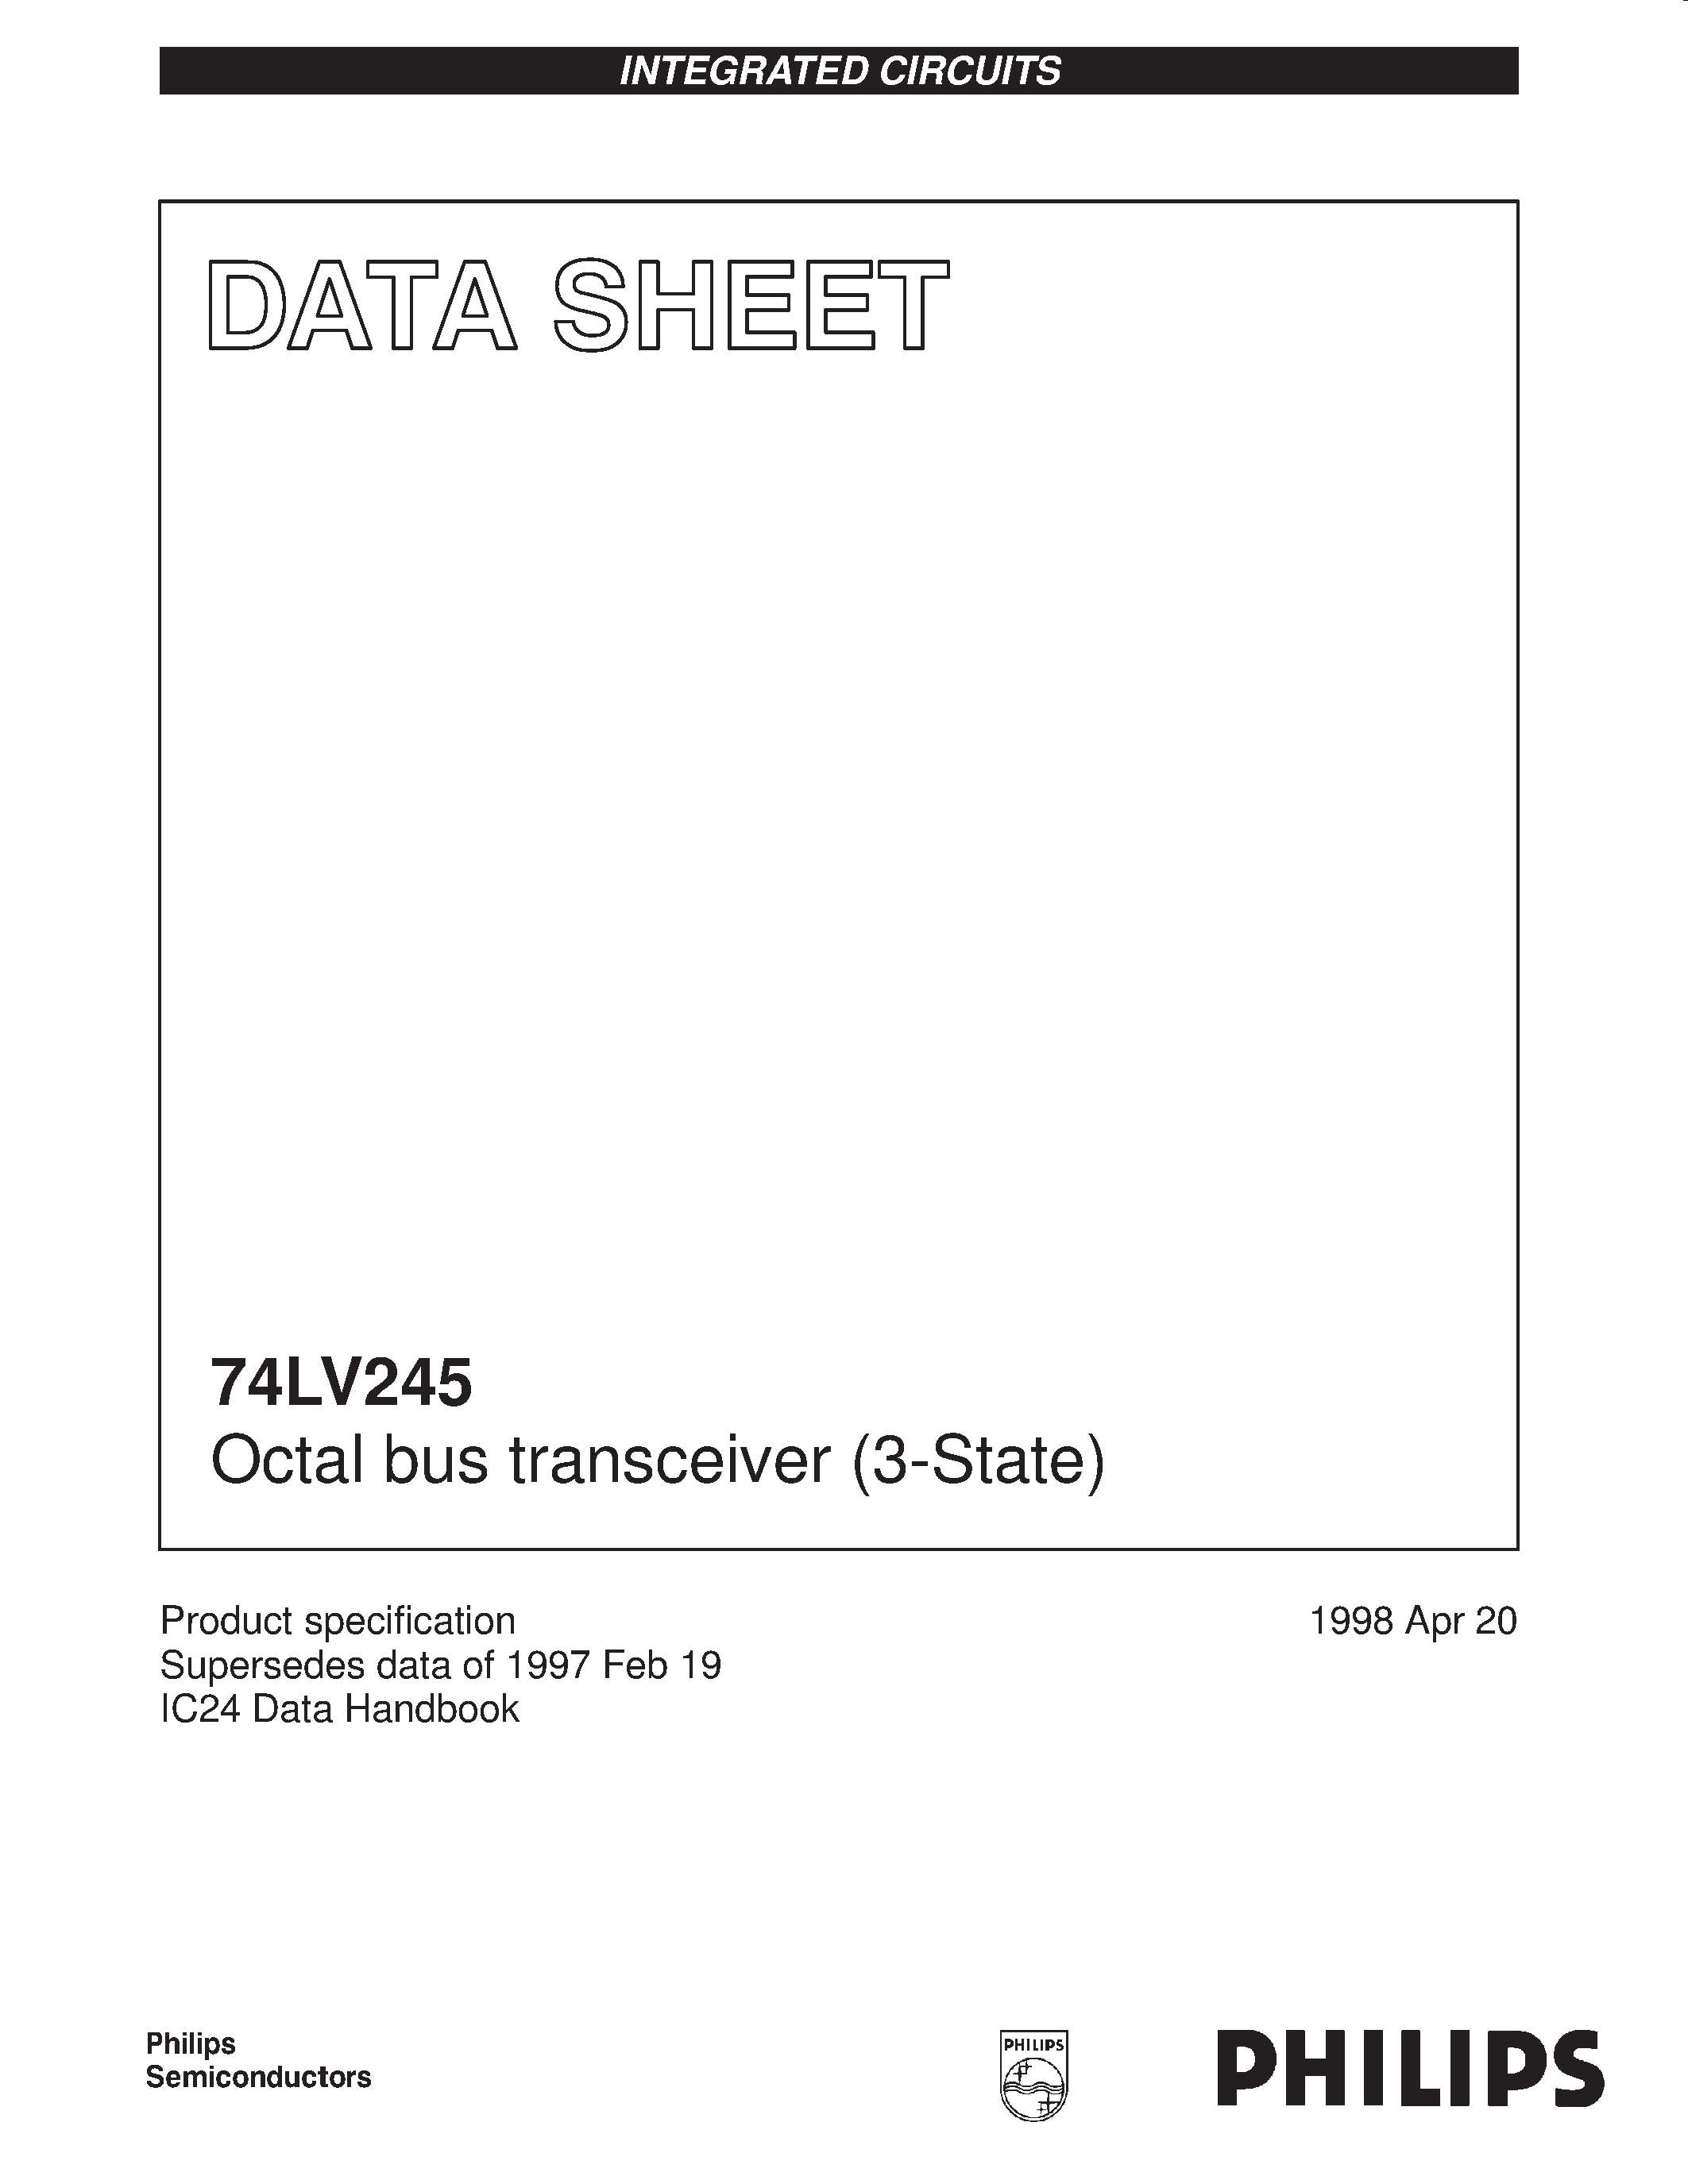 Даташит 74LV245 - Octal bus transceiver 3-State страница 1